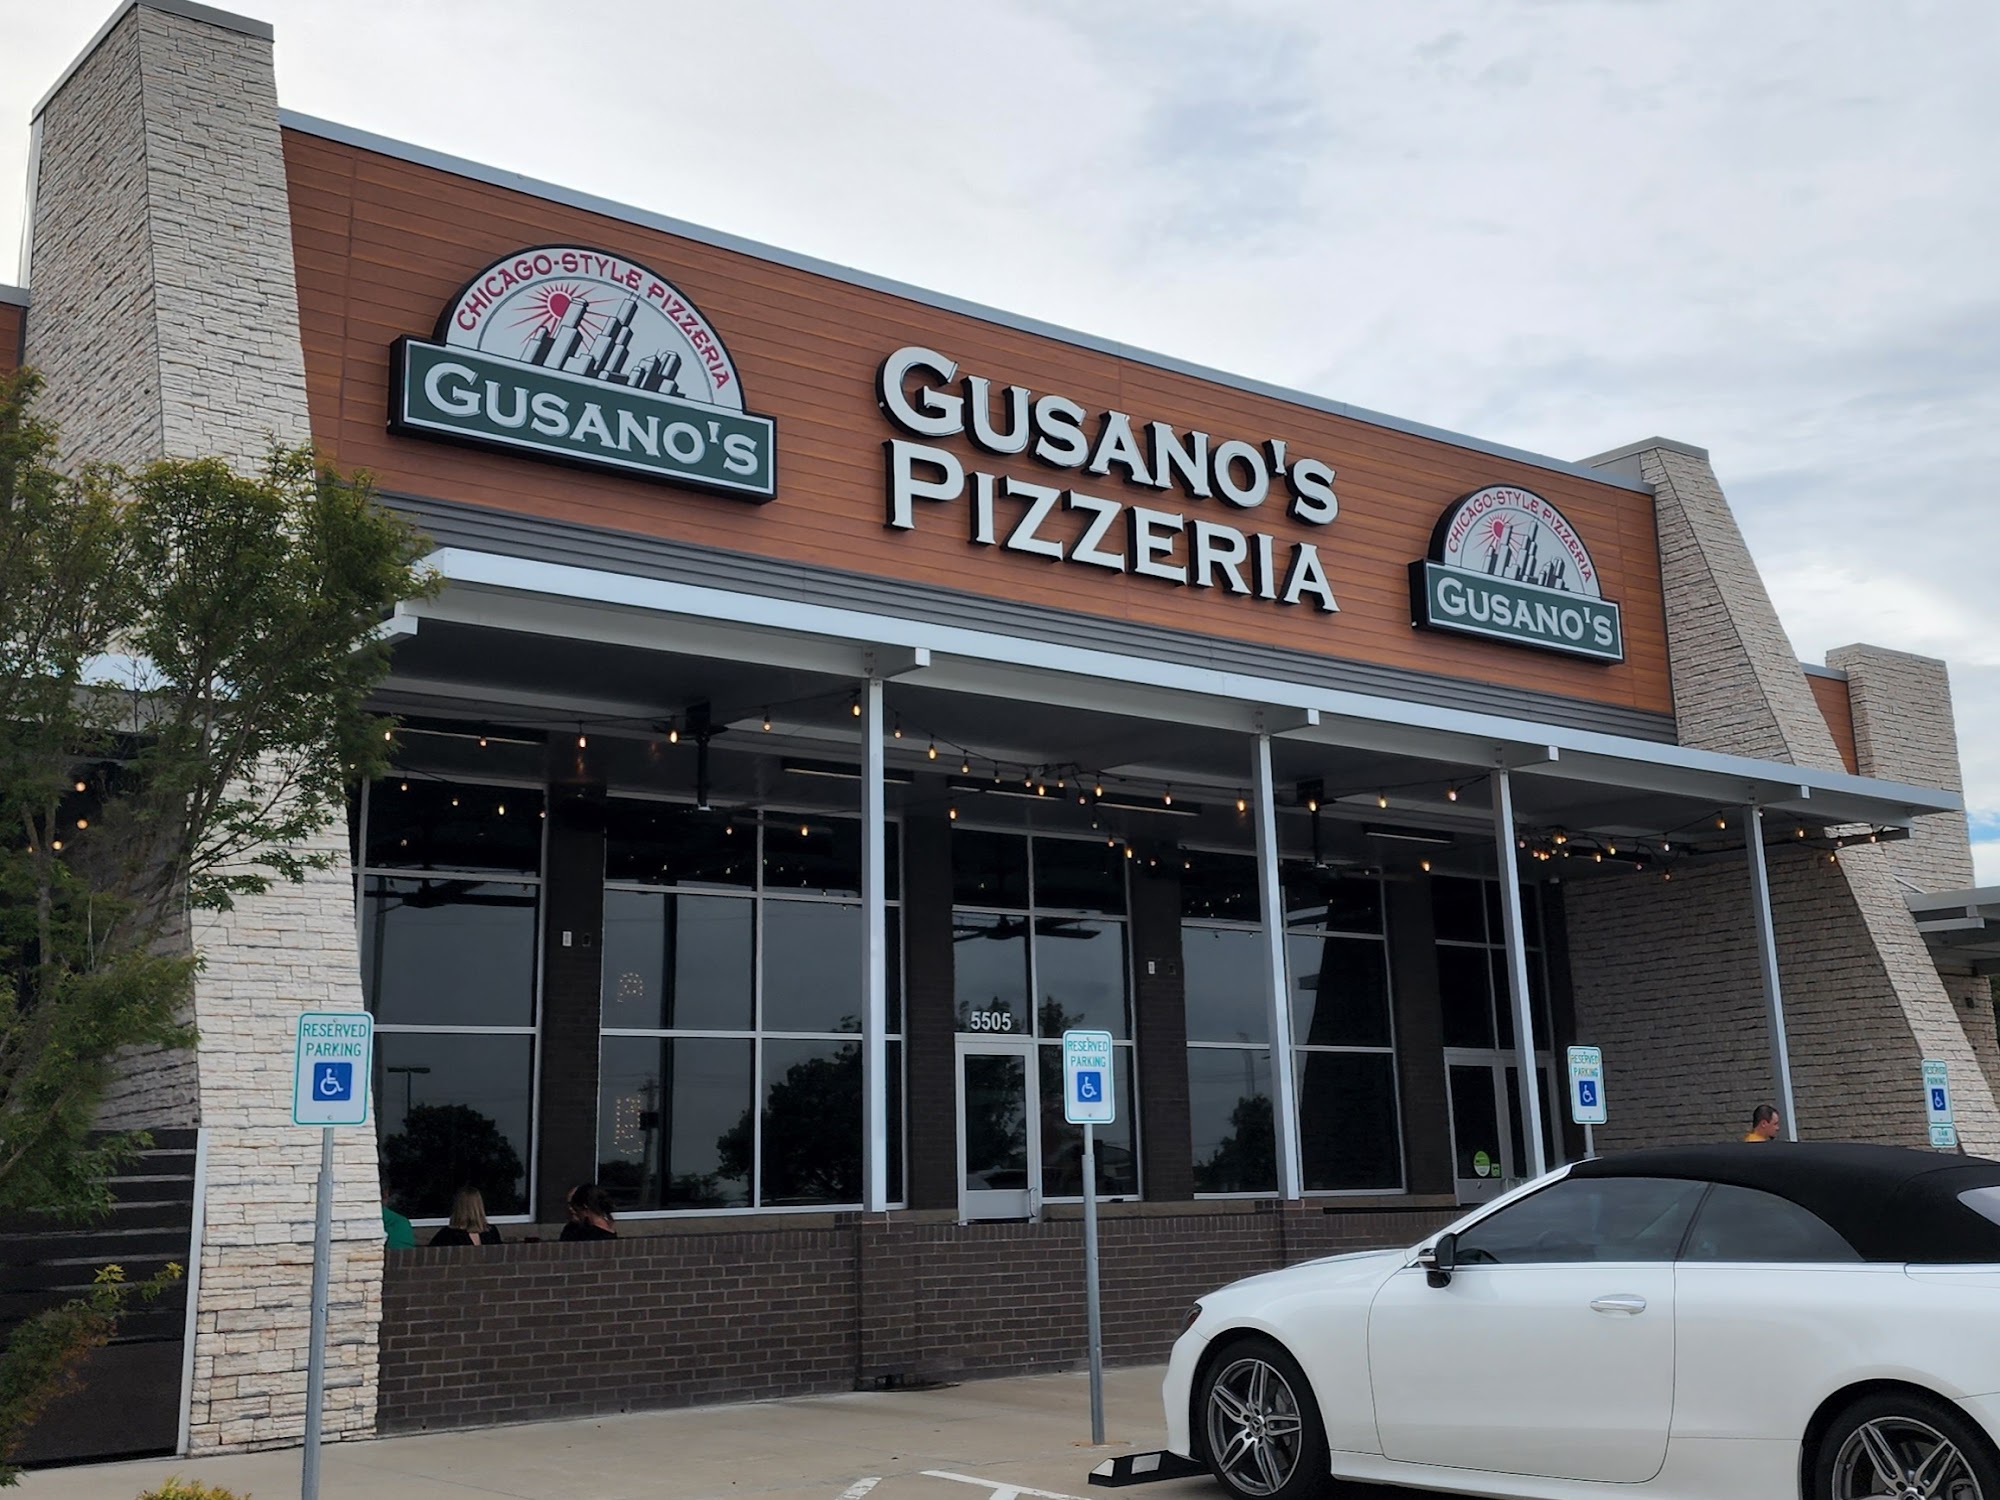 Gusano’s Chicago Style Pizzeria